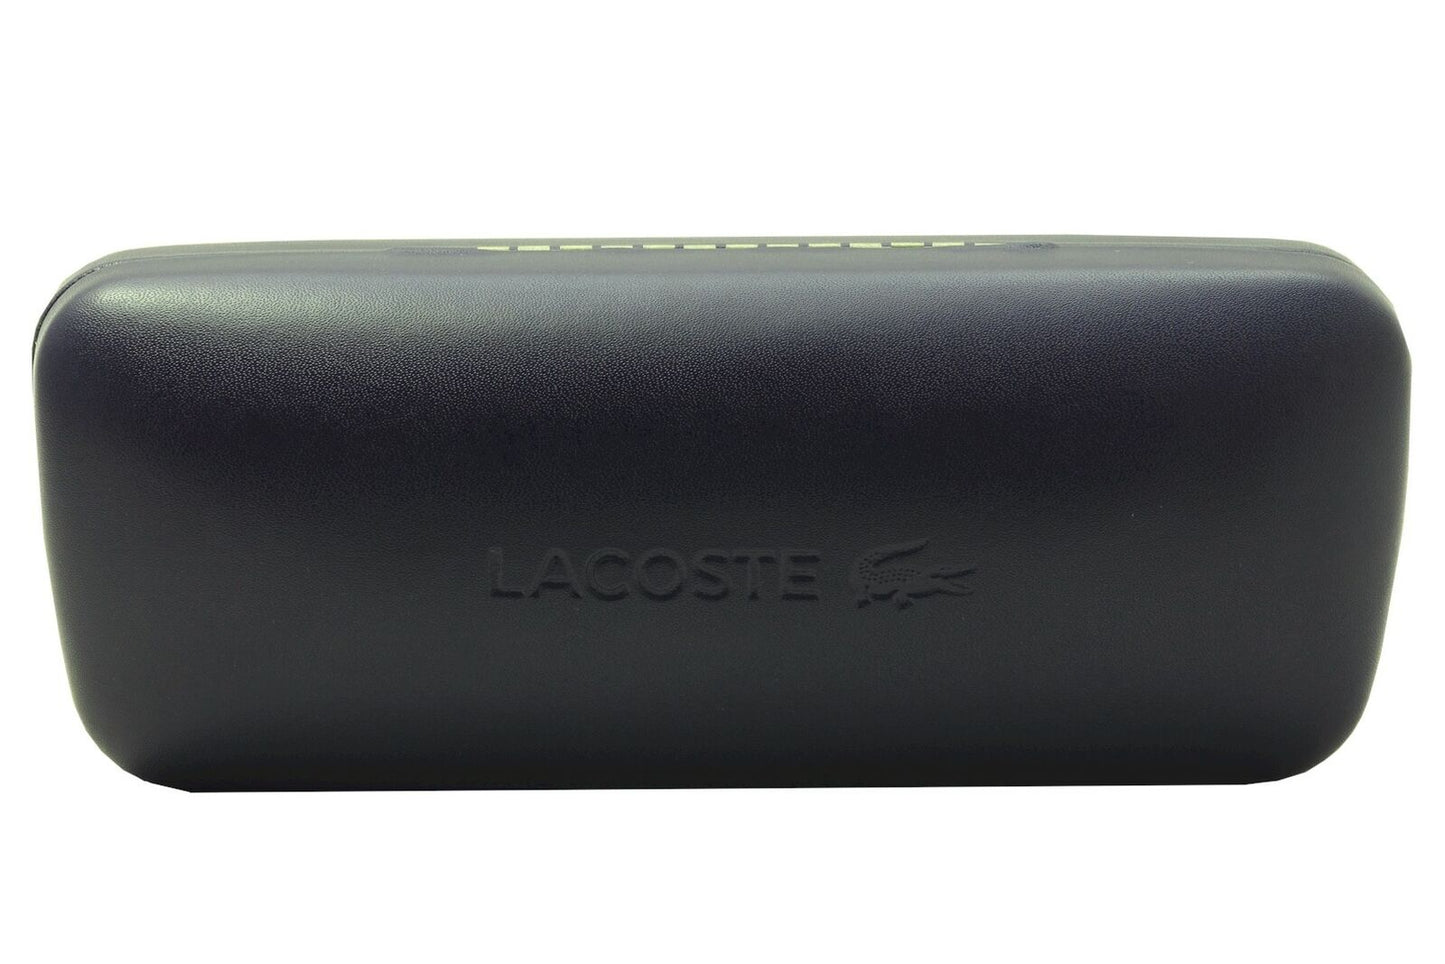 Lacoste L2817-210-54  New Eyeglasses